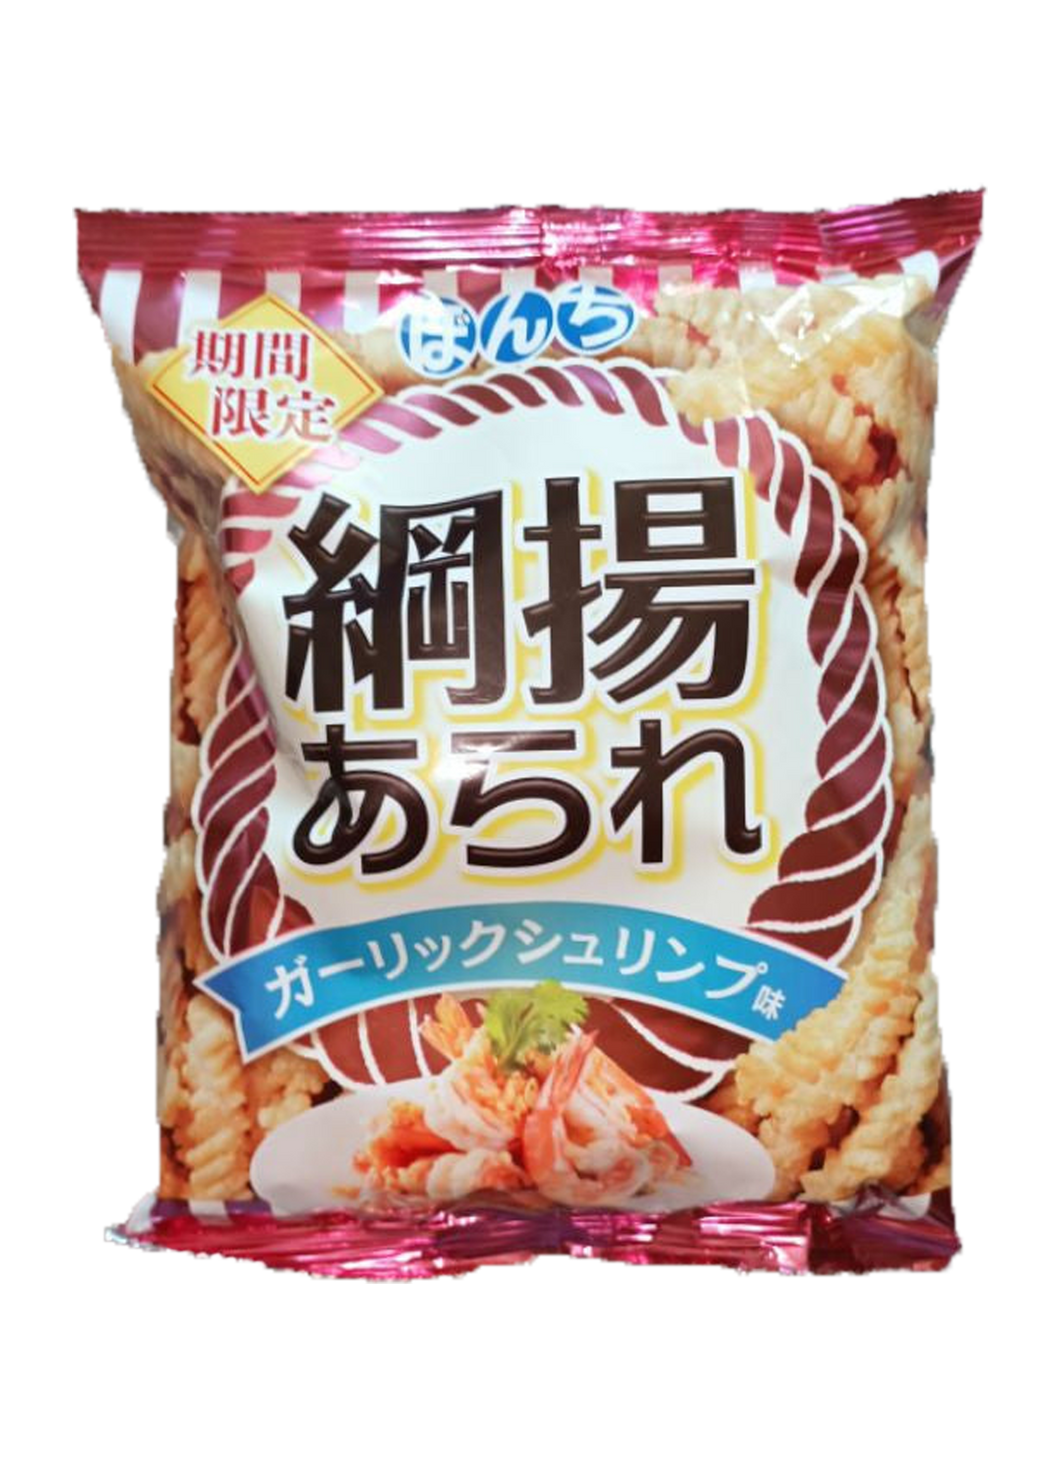 Wheat Cracker Bonchi Tsunaage Garlic Shrimp 70g